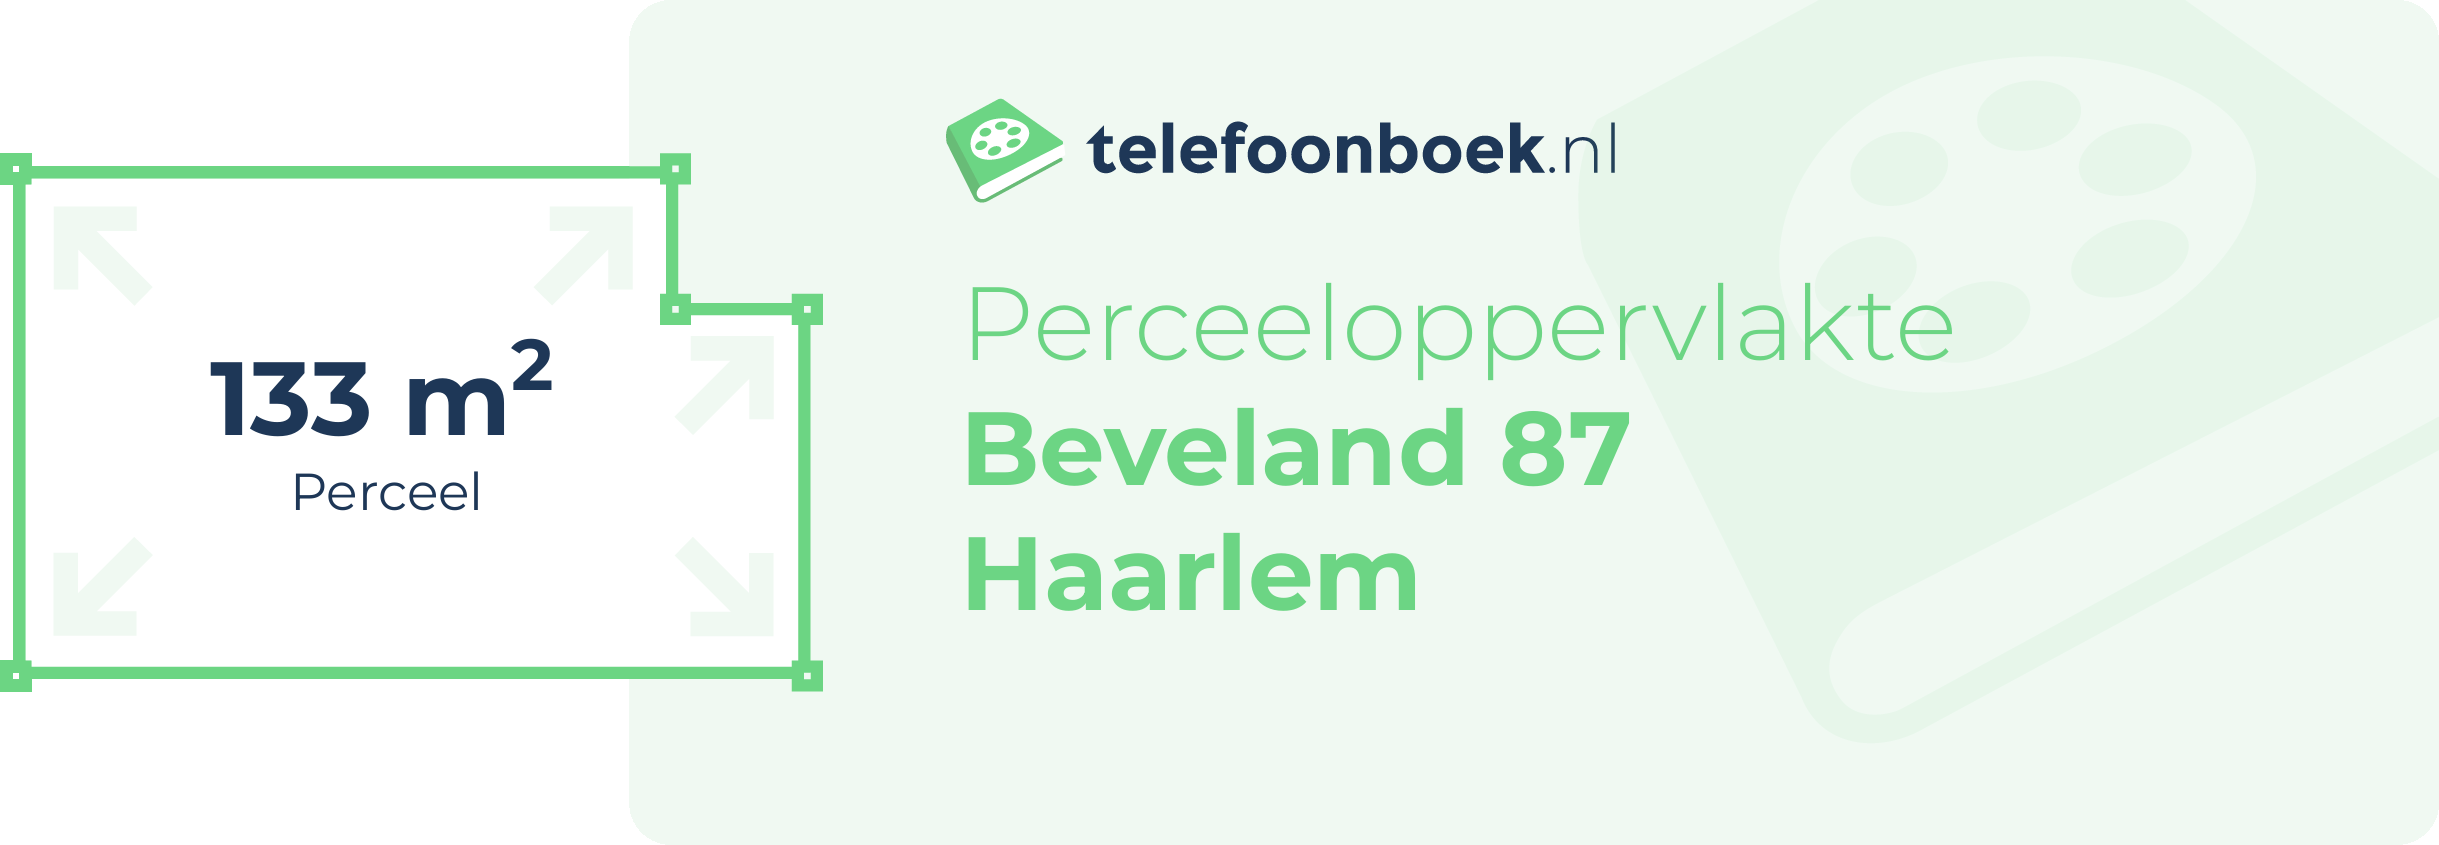 Perceeloppervlakte Beveland 87 Haarlem